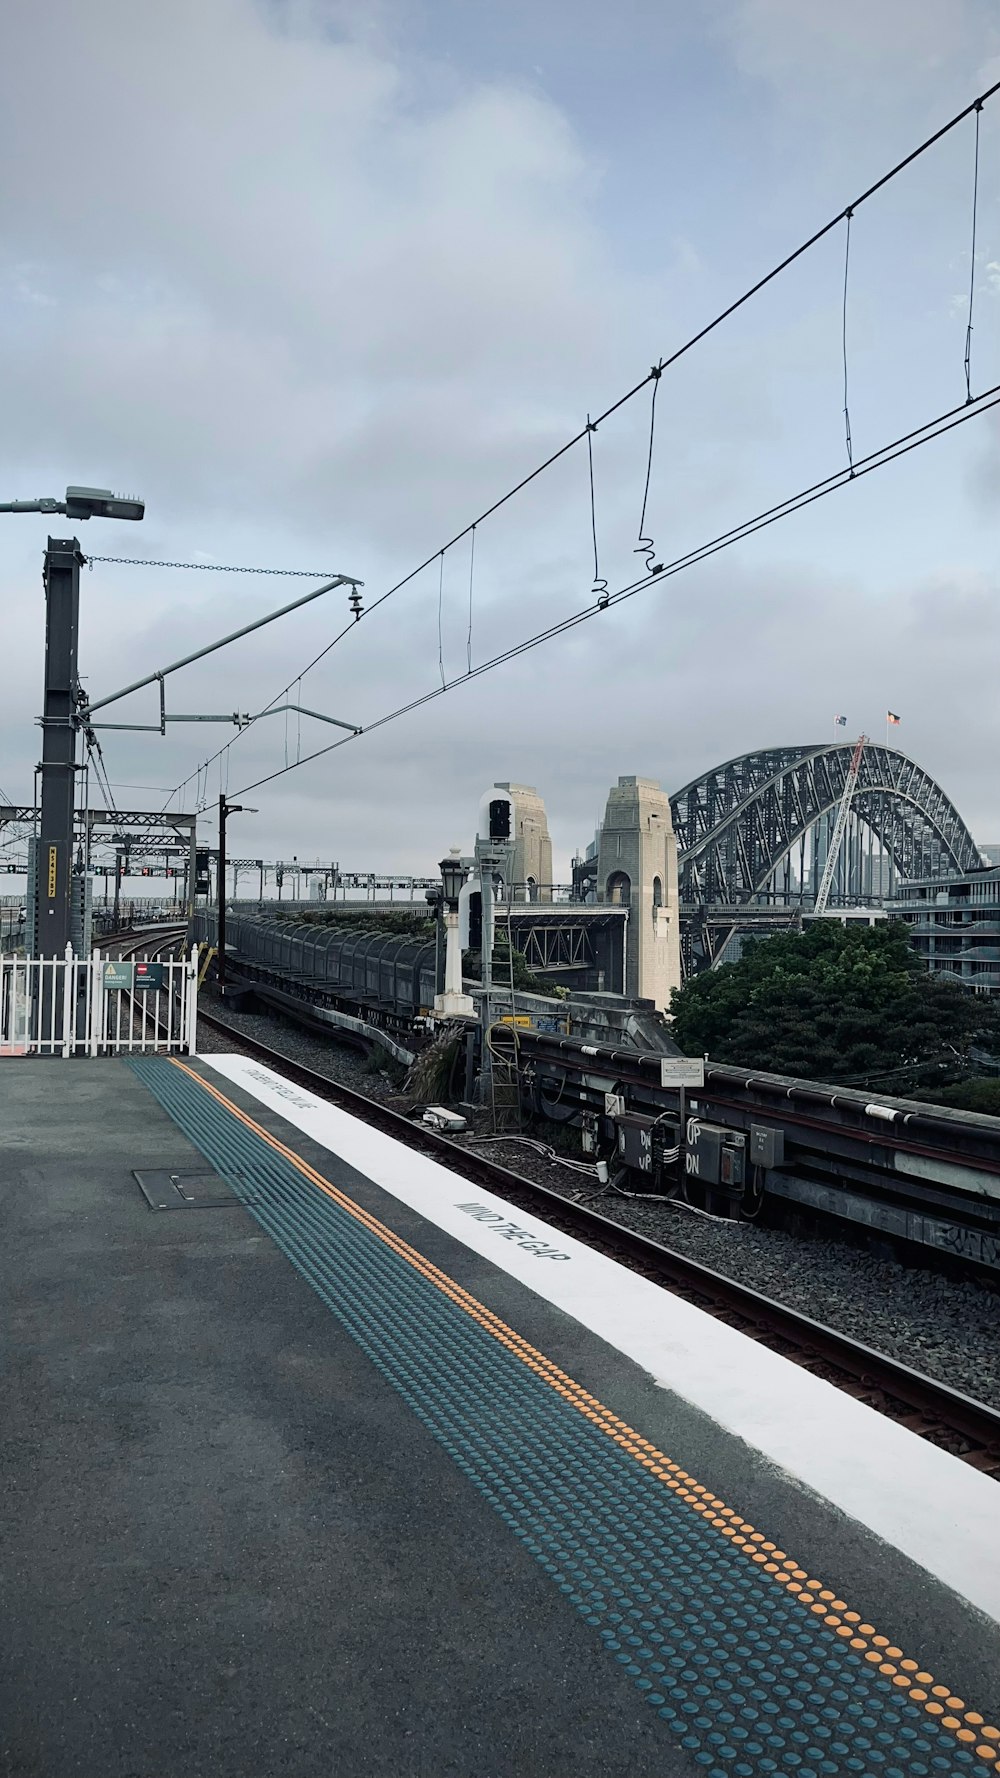 a train on a train track next to a bridge